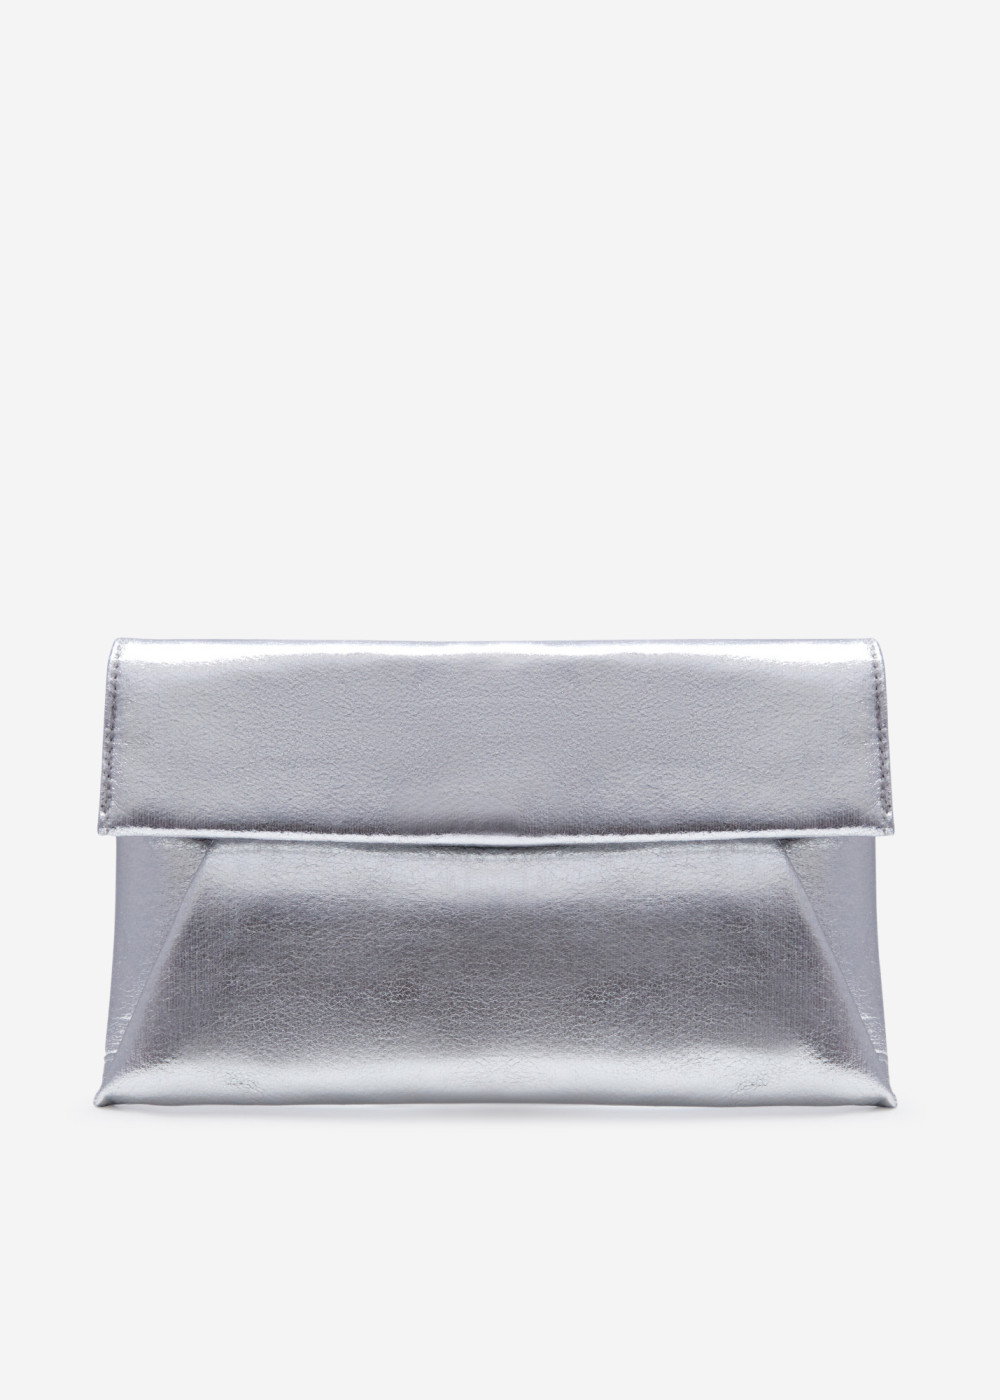 Silver metallic clutch bag 4